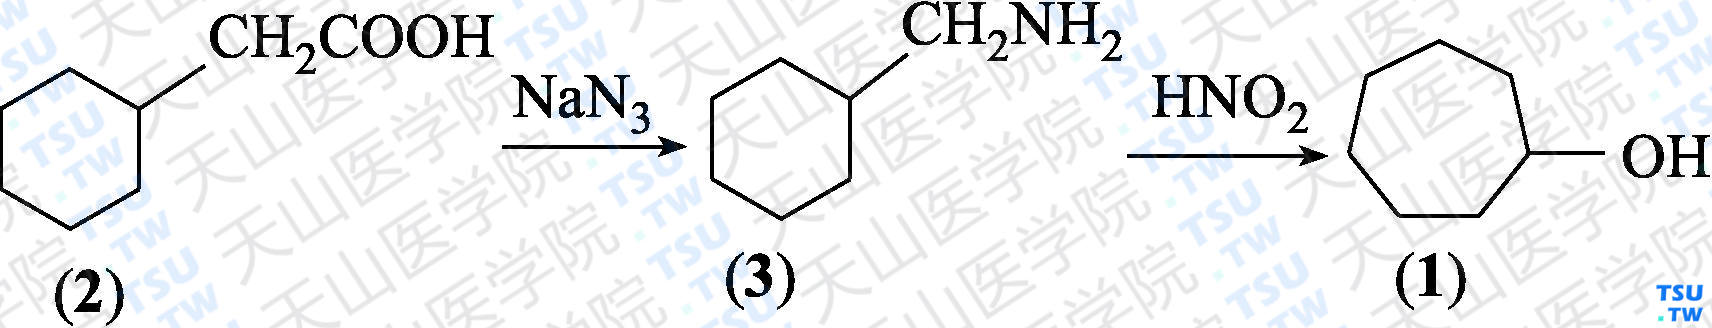 环庚醇（分子式：C<sub>7</sub>H<sub>14</sub>O）的合成方法路线及其结构式